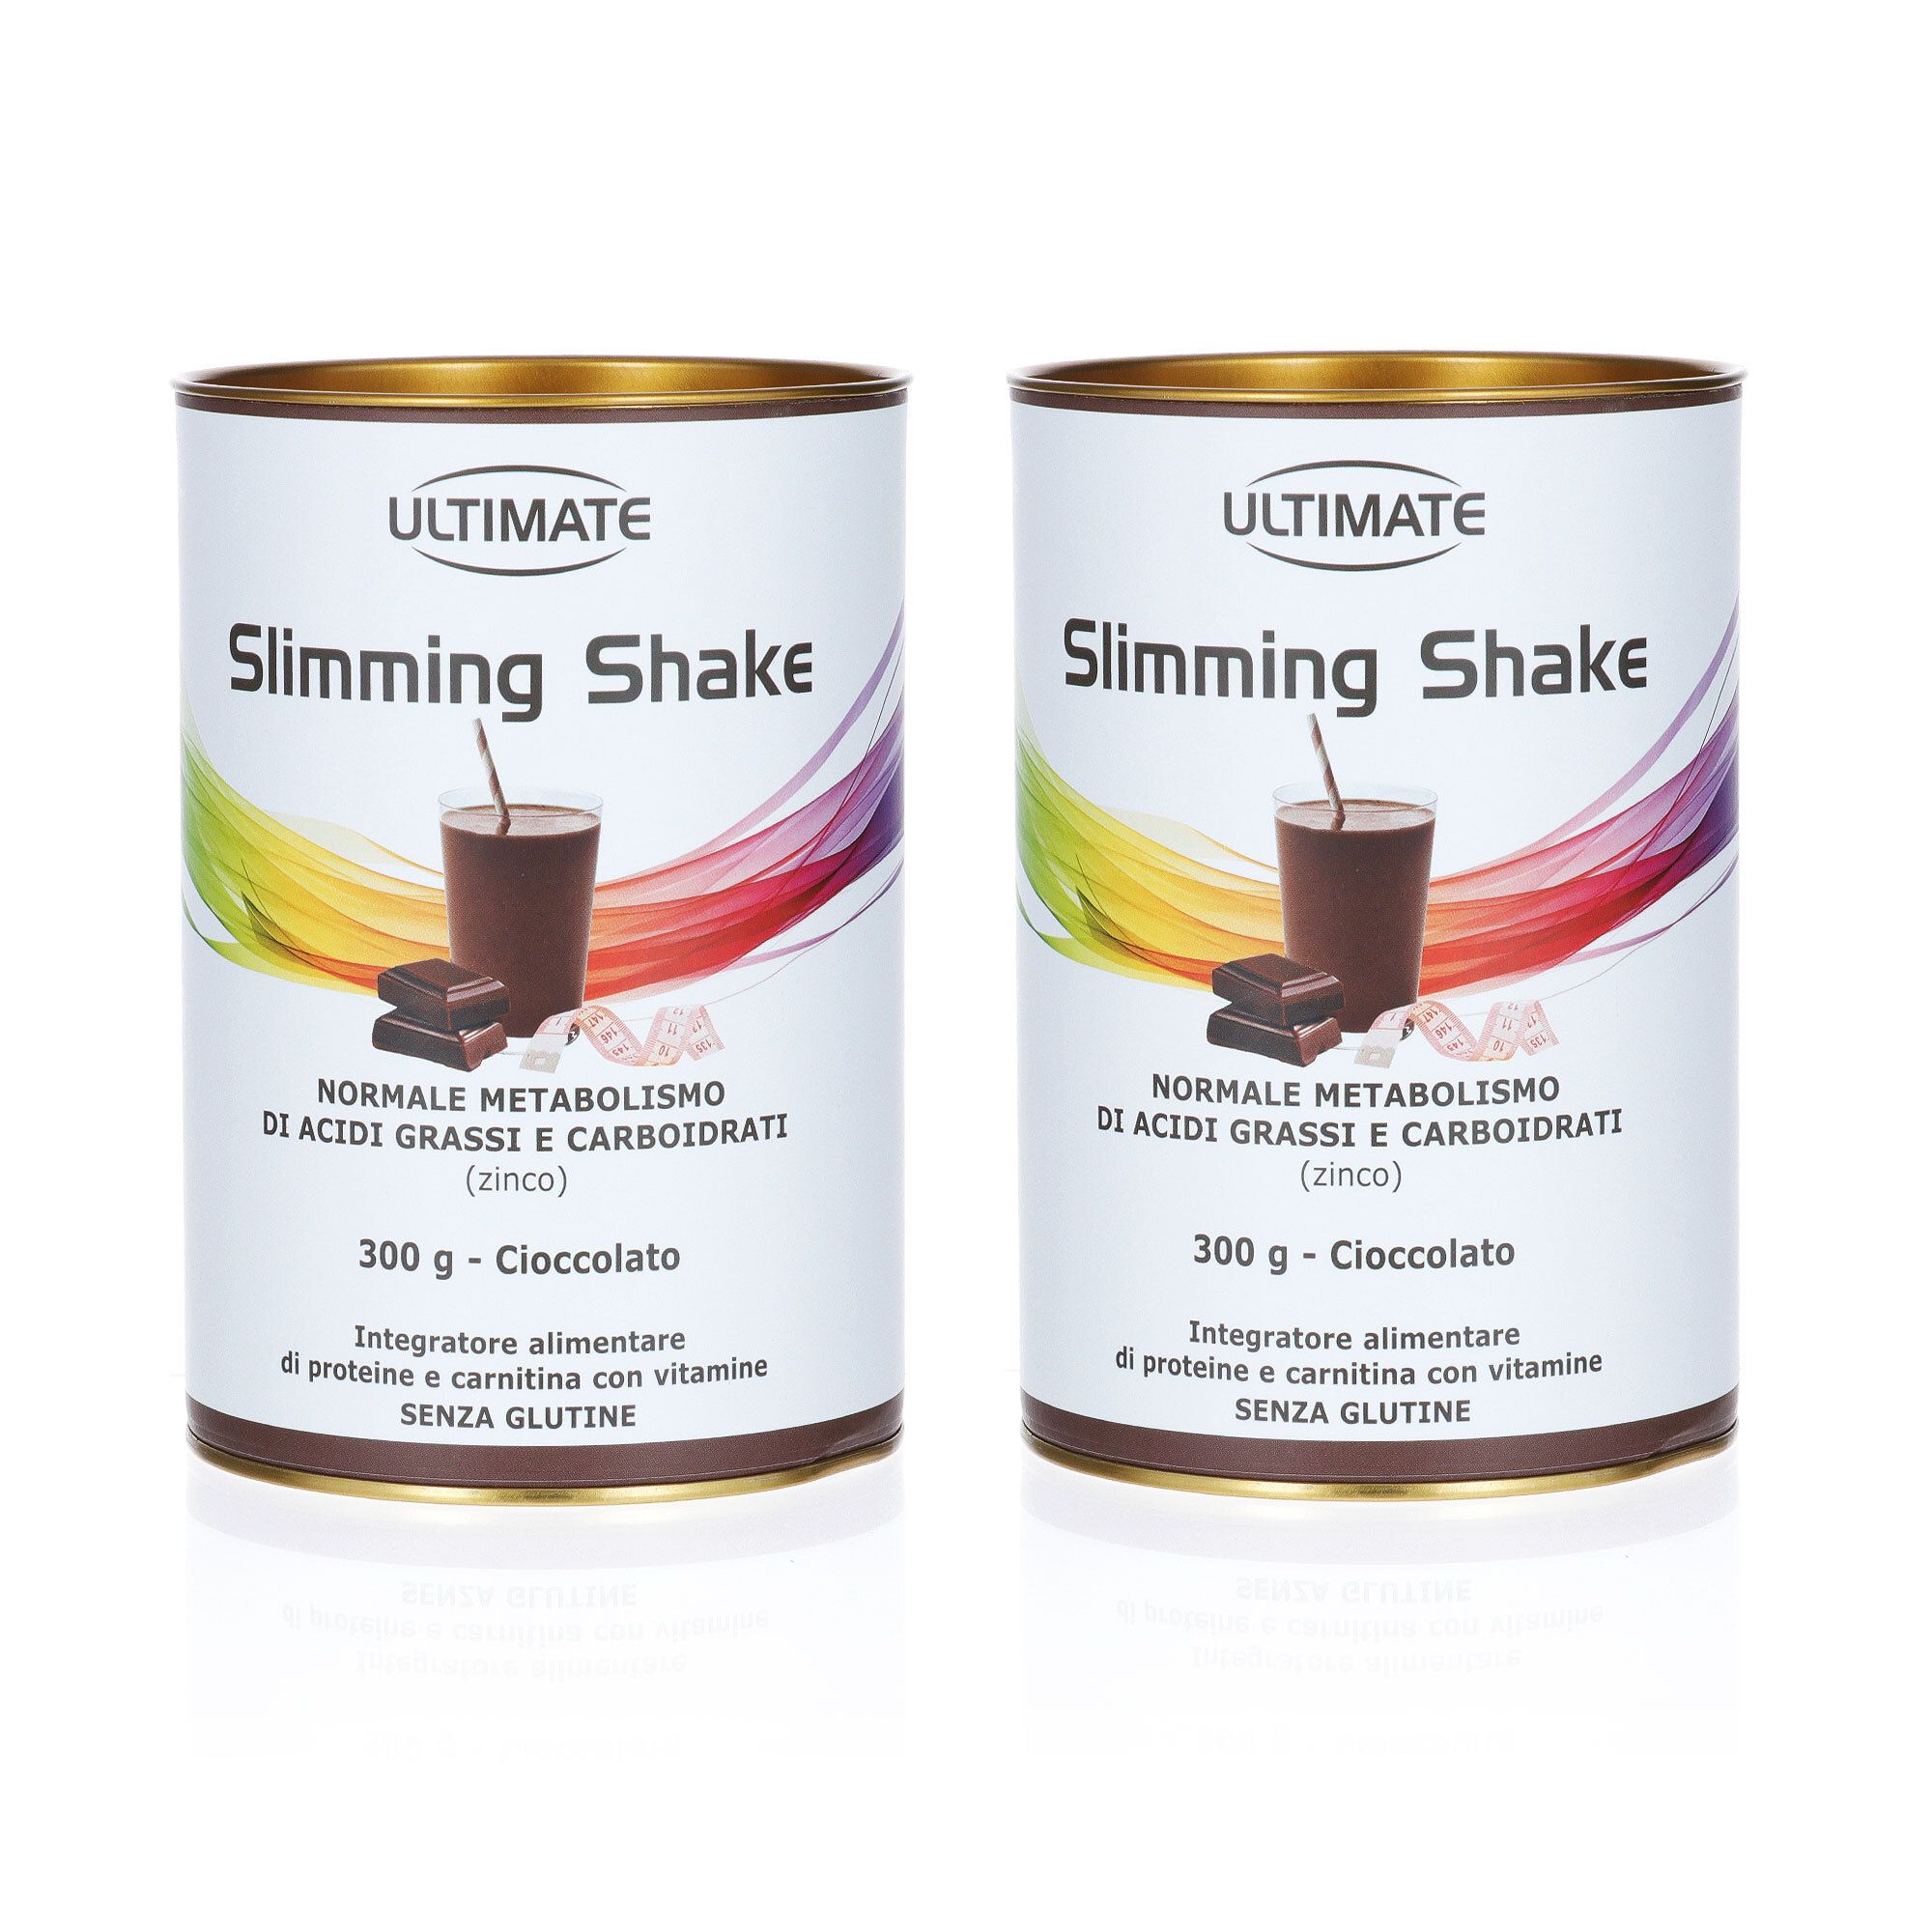 2 Slimming Shake integratori alimentari con proteine